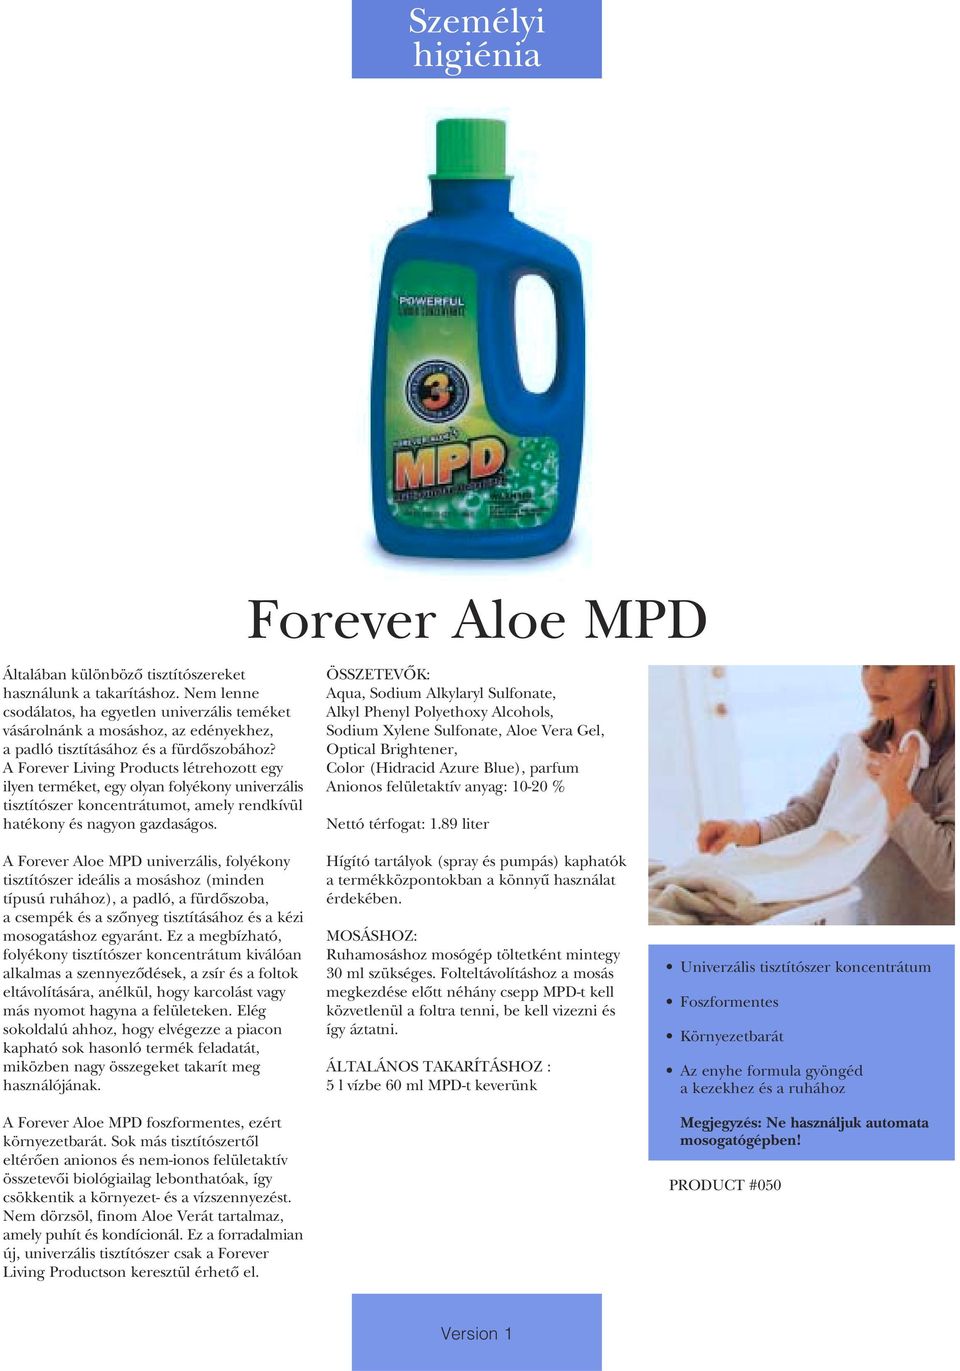 Forever Aloe MPD : Aqua, Sodium Alkylaryl Sulfonate, Alkyl Phenyl Polyethoxy Alcohols, Sodium Xylene Sulfonate, Aloe Vera Gel, Optical Brightener, Color (Hidracid Azure Blue), parfum Anionos